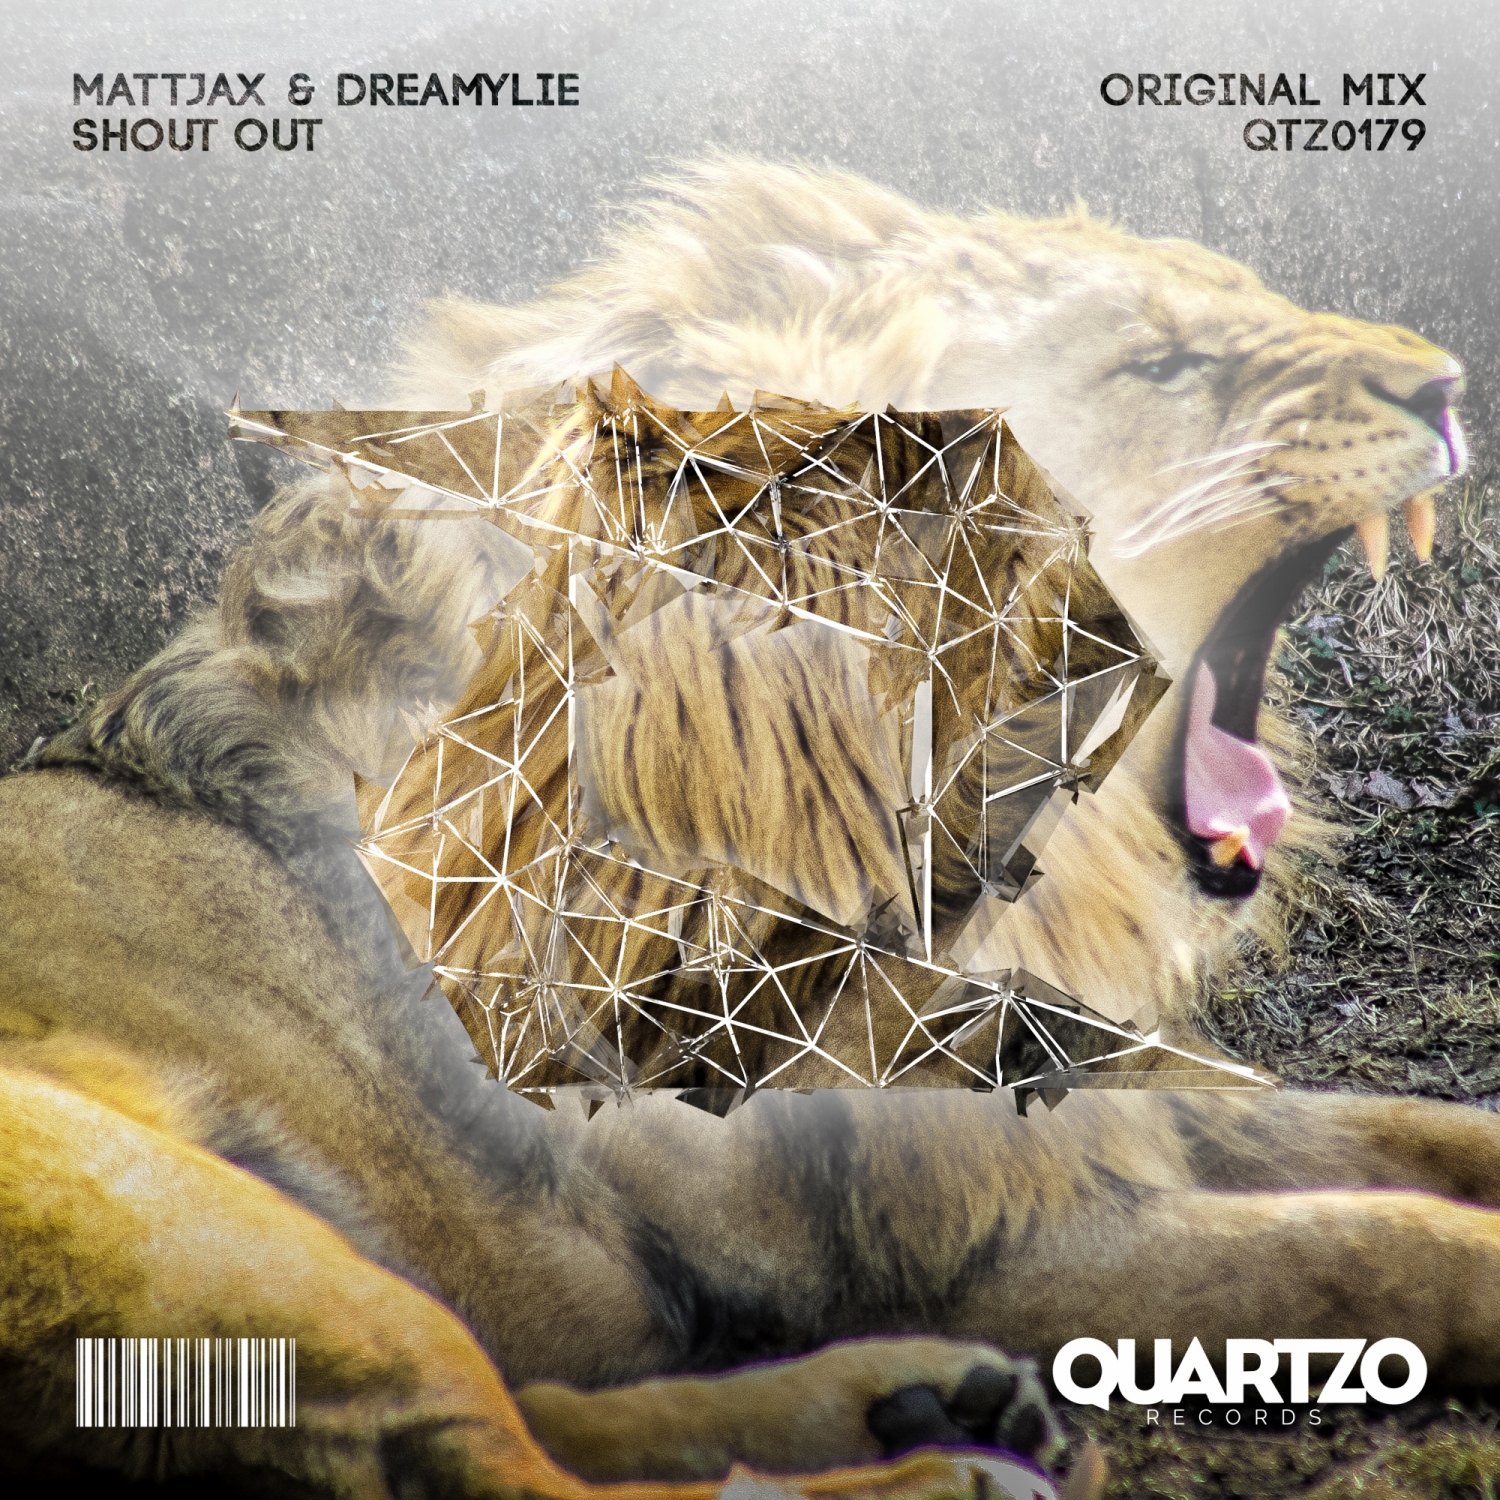 Mattjax & Dreamylie - Shout Out download mp3